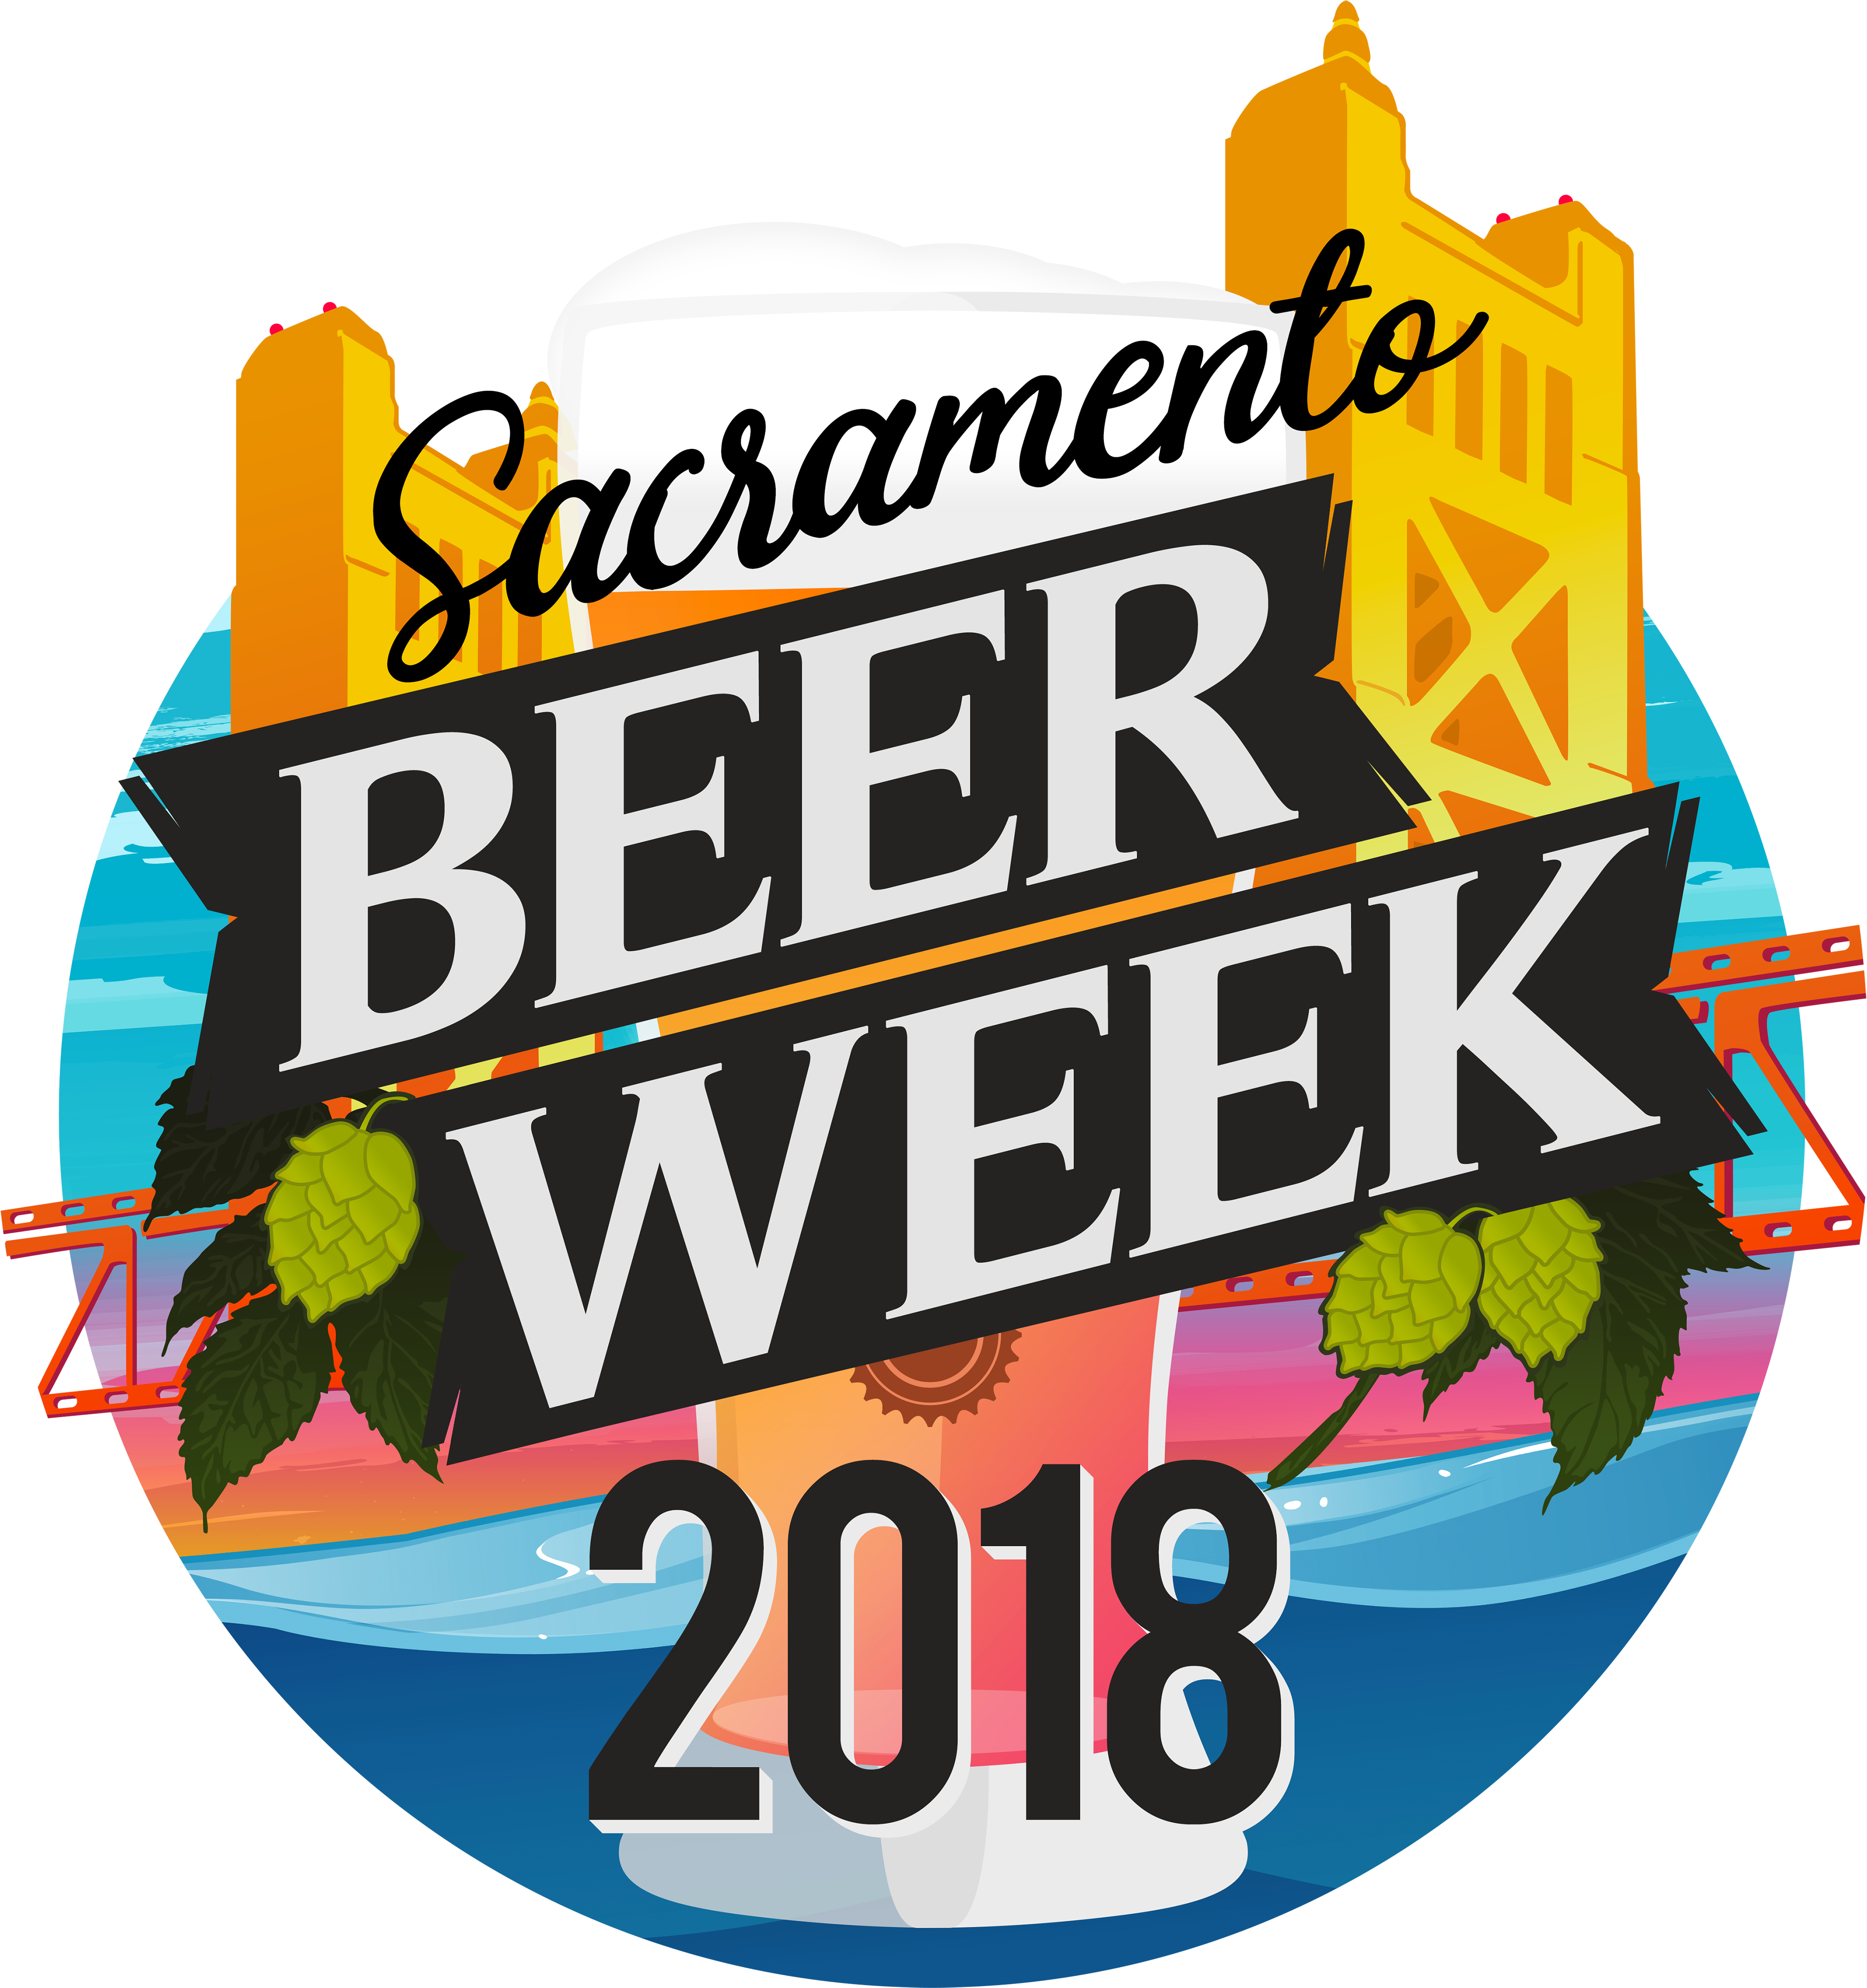 Image - Sacramento Beer Week 2018 (5000x5000)